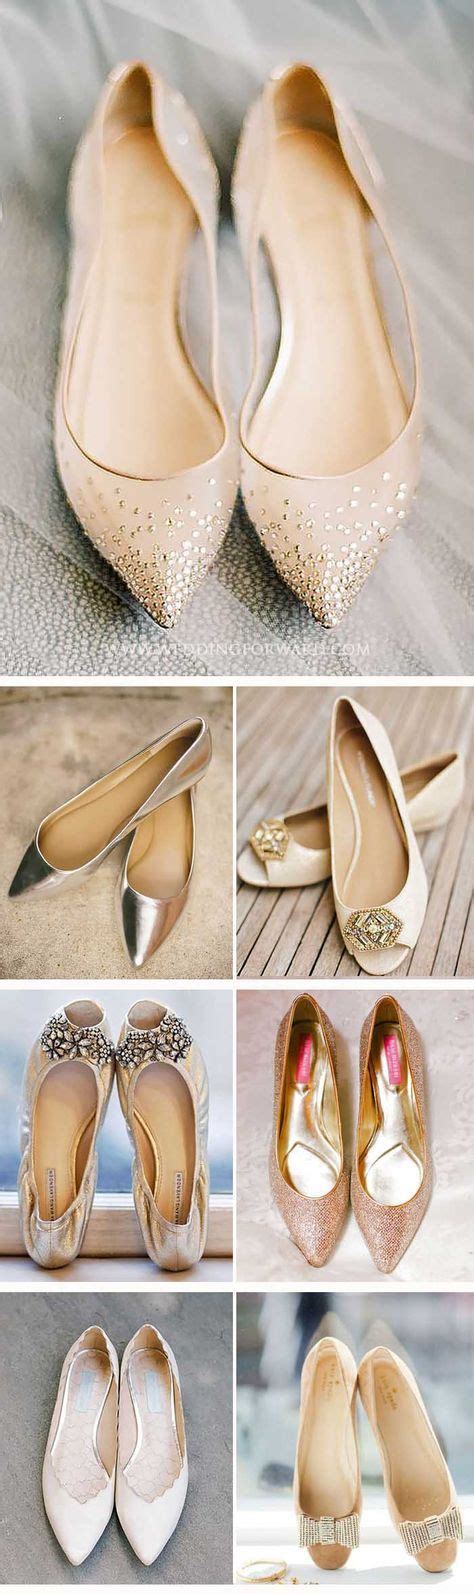 wedding flats 46 comfortable shoe ideas faqs wedding shoes dress shoe bag wedding shoes flats